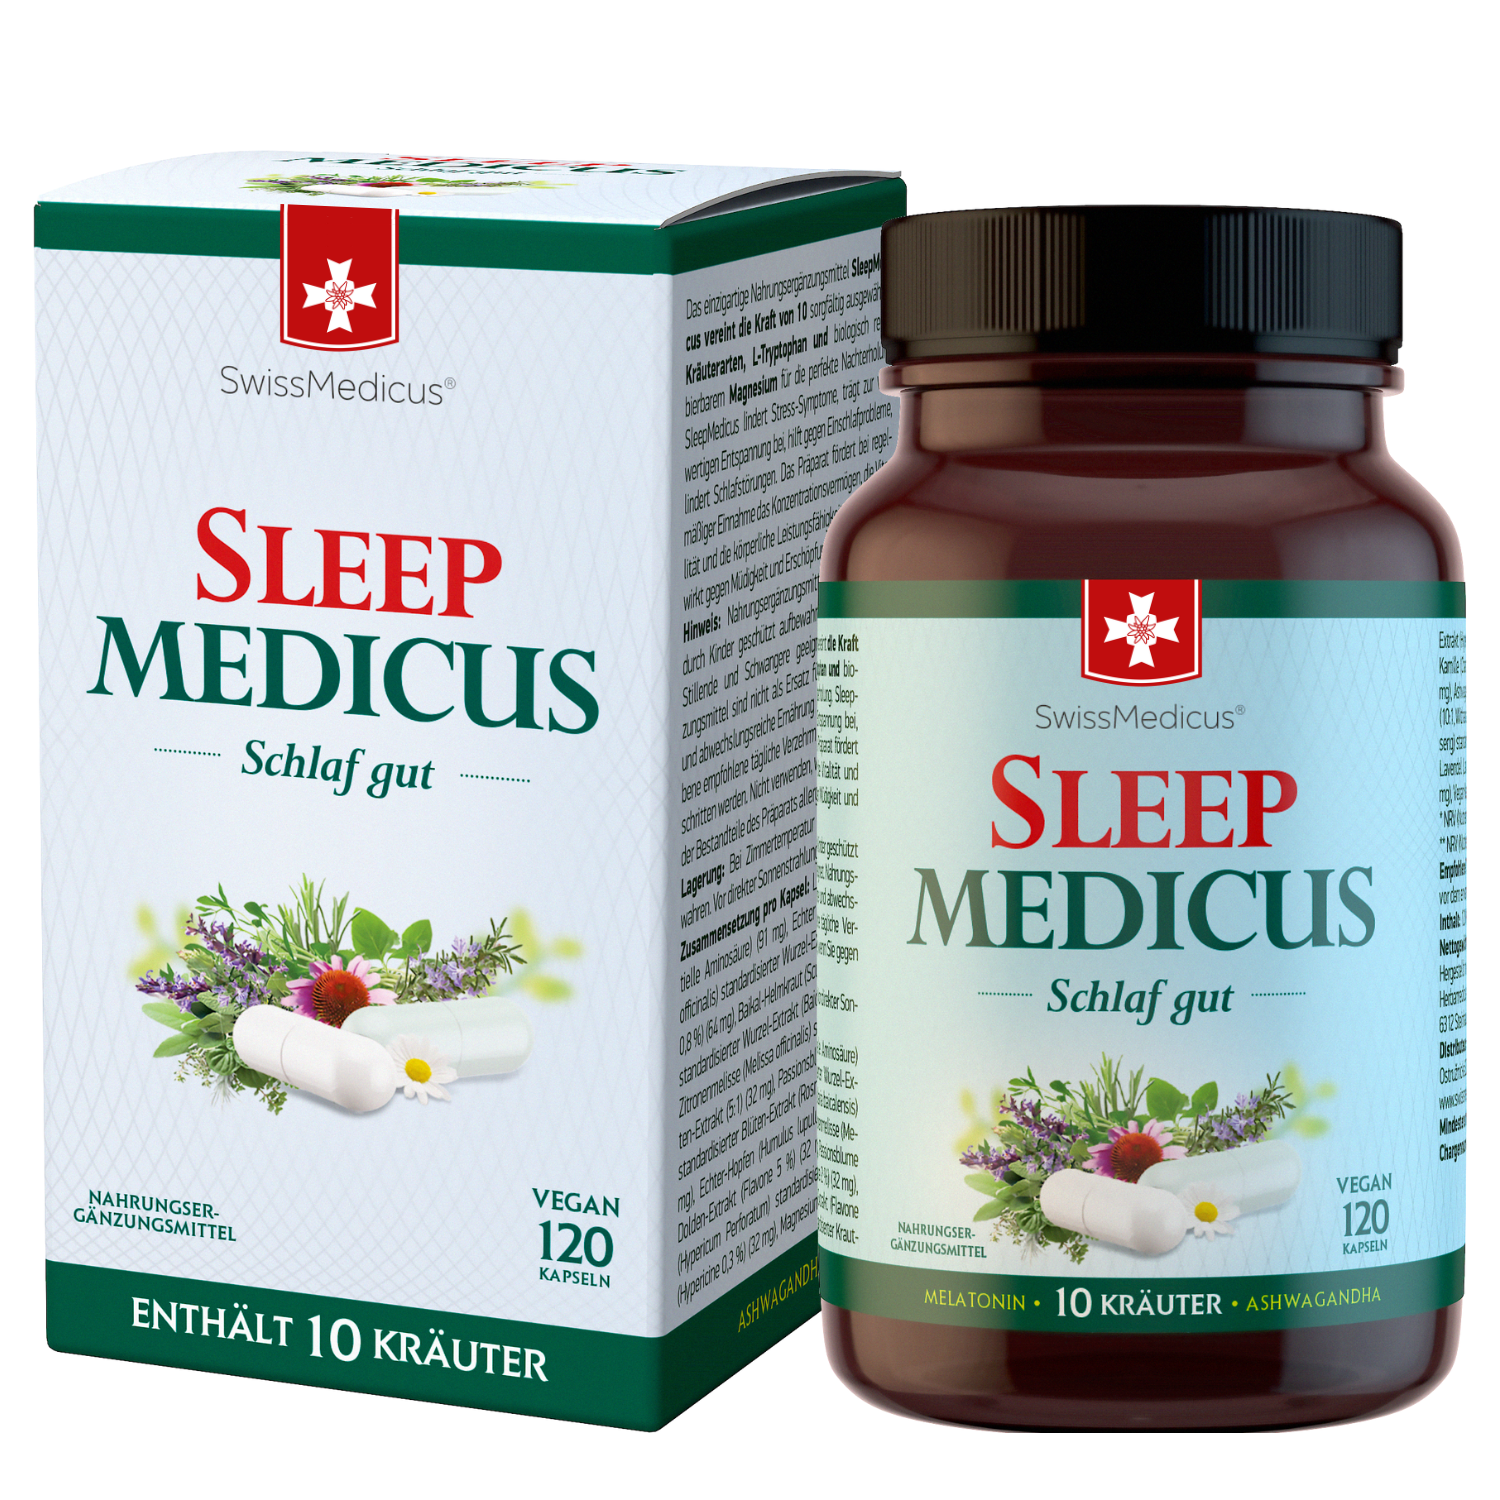 SleepMedicus 120 capsules